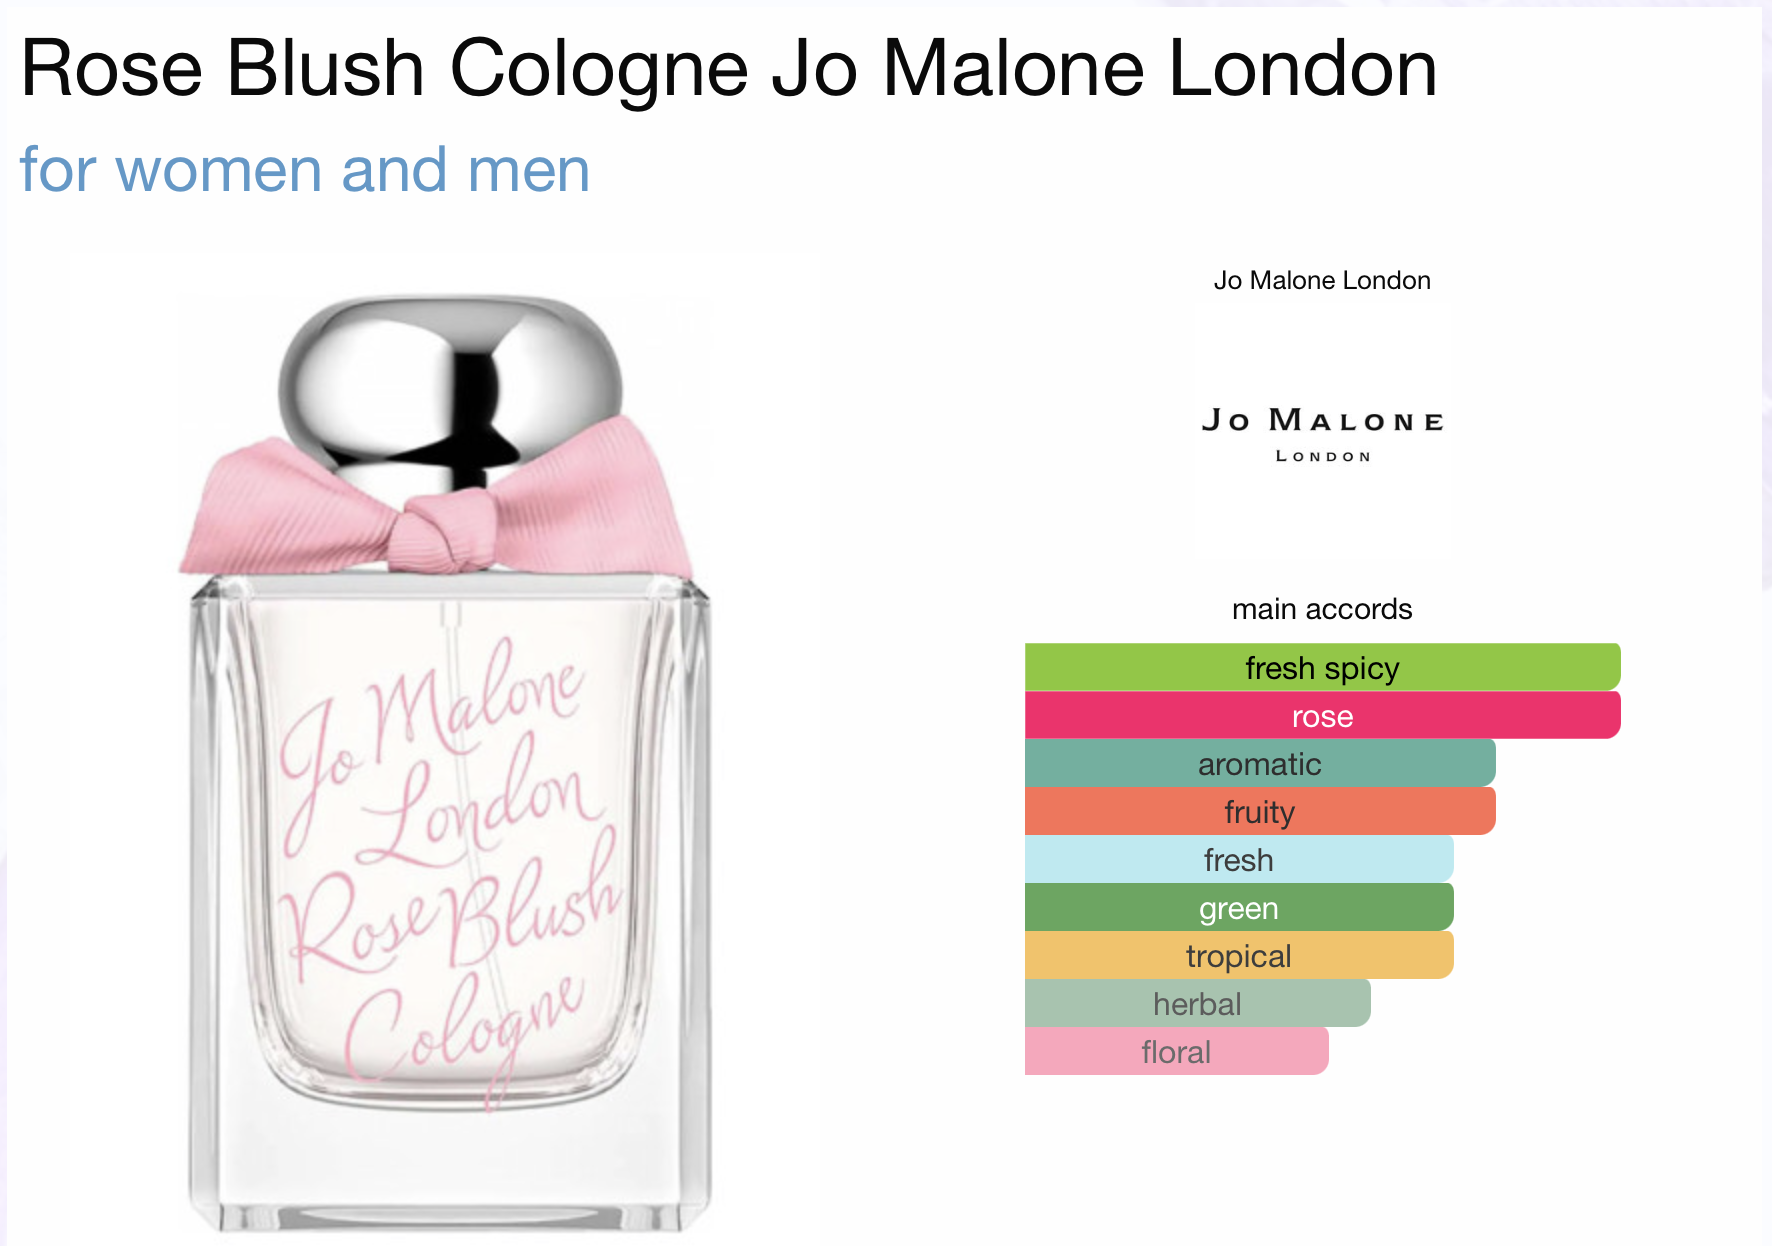 o Malone London Rose Blush Cologne ingredients